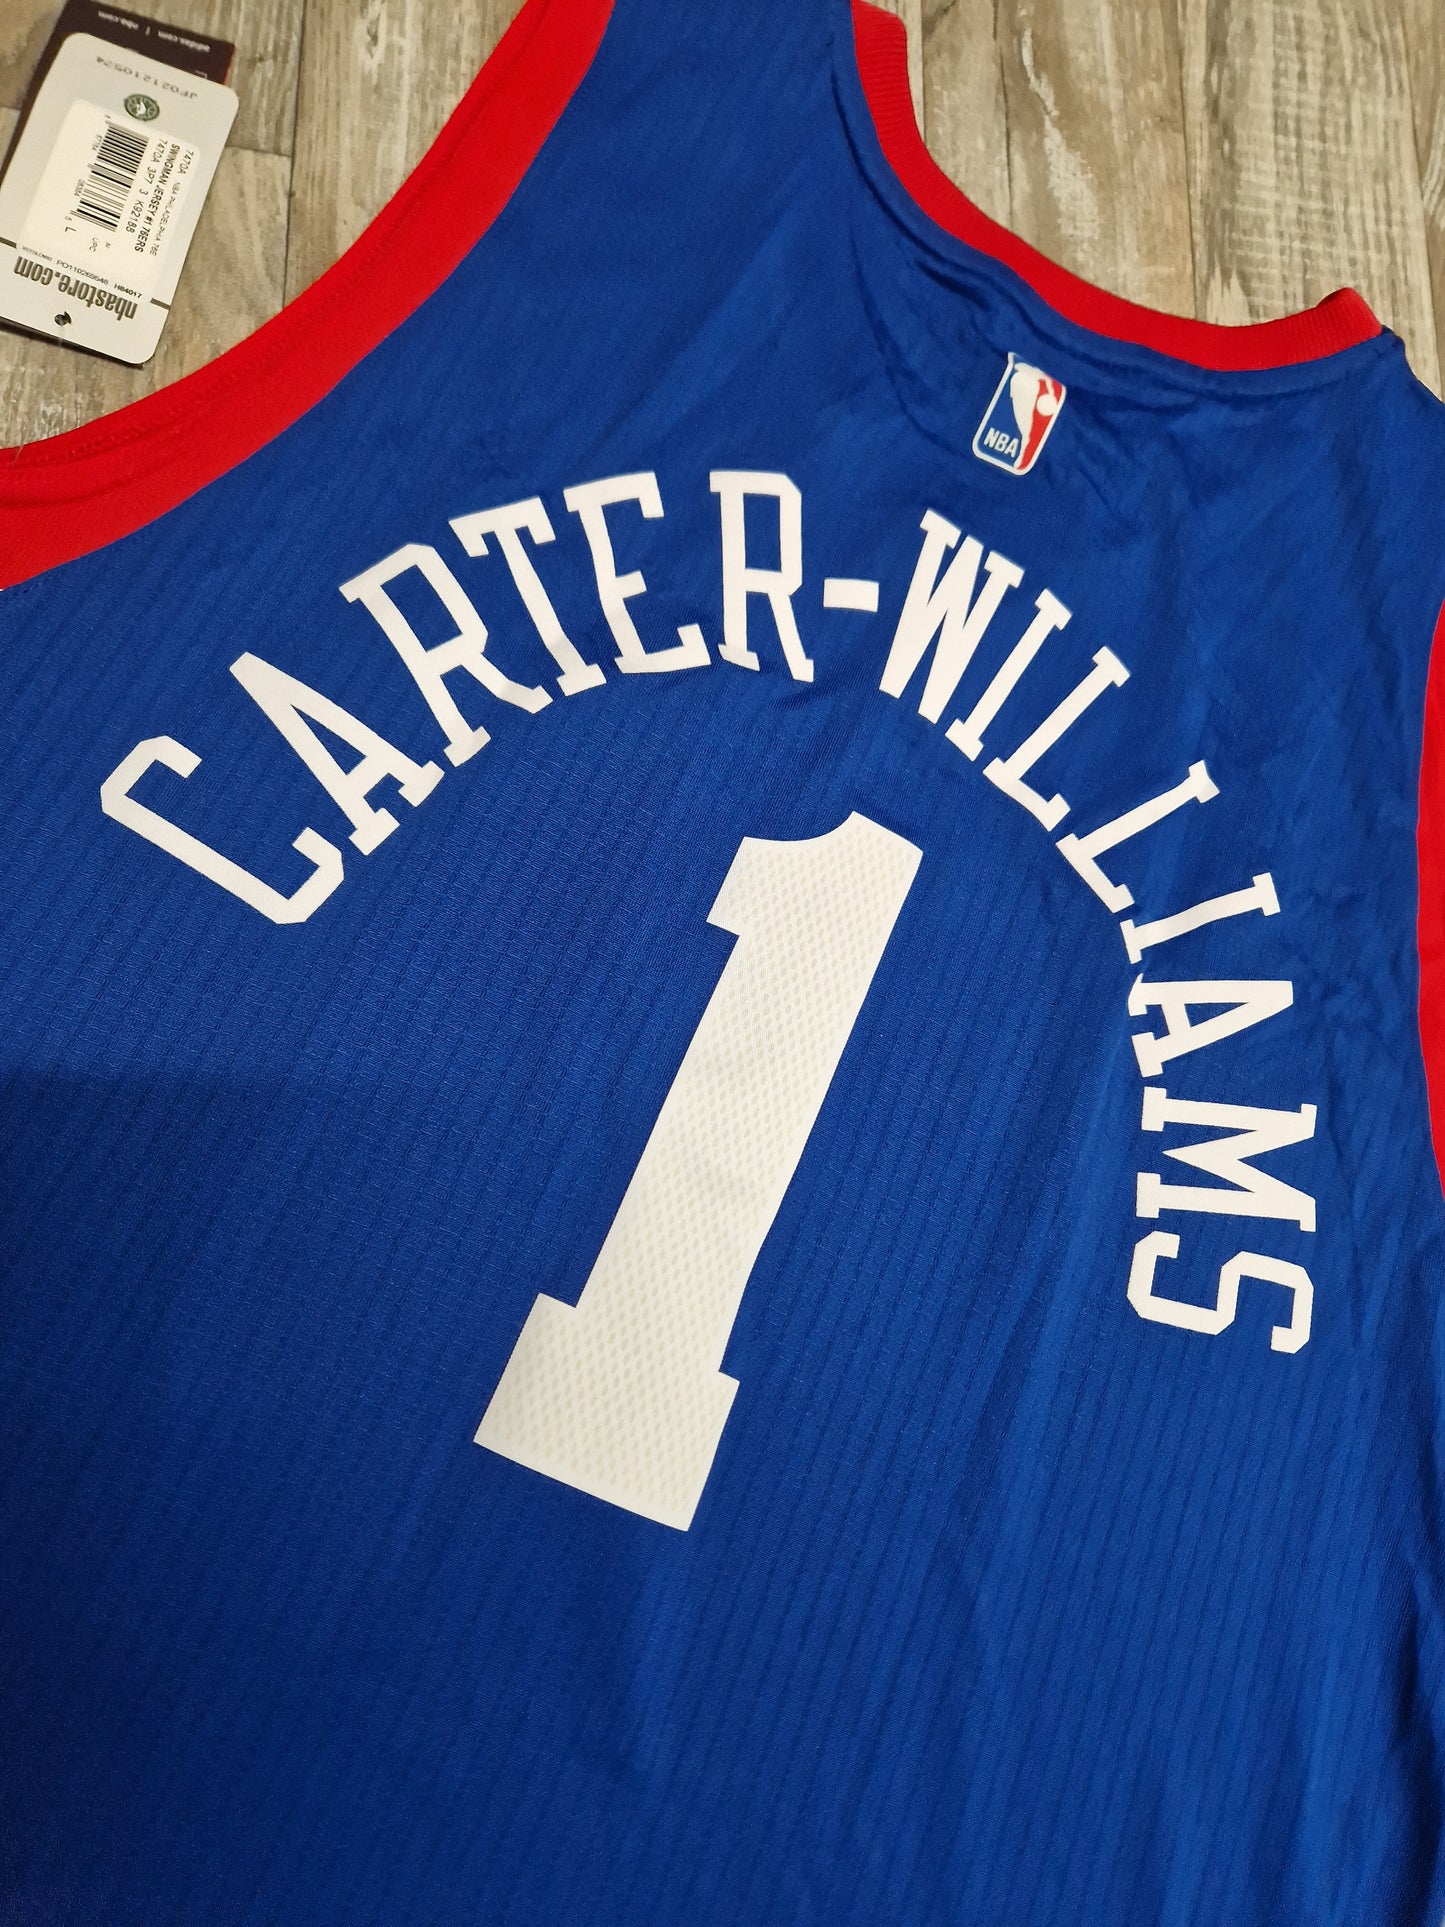 Michael Carter-Williams Philadelphia 76ers Jersey Size Large